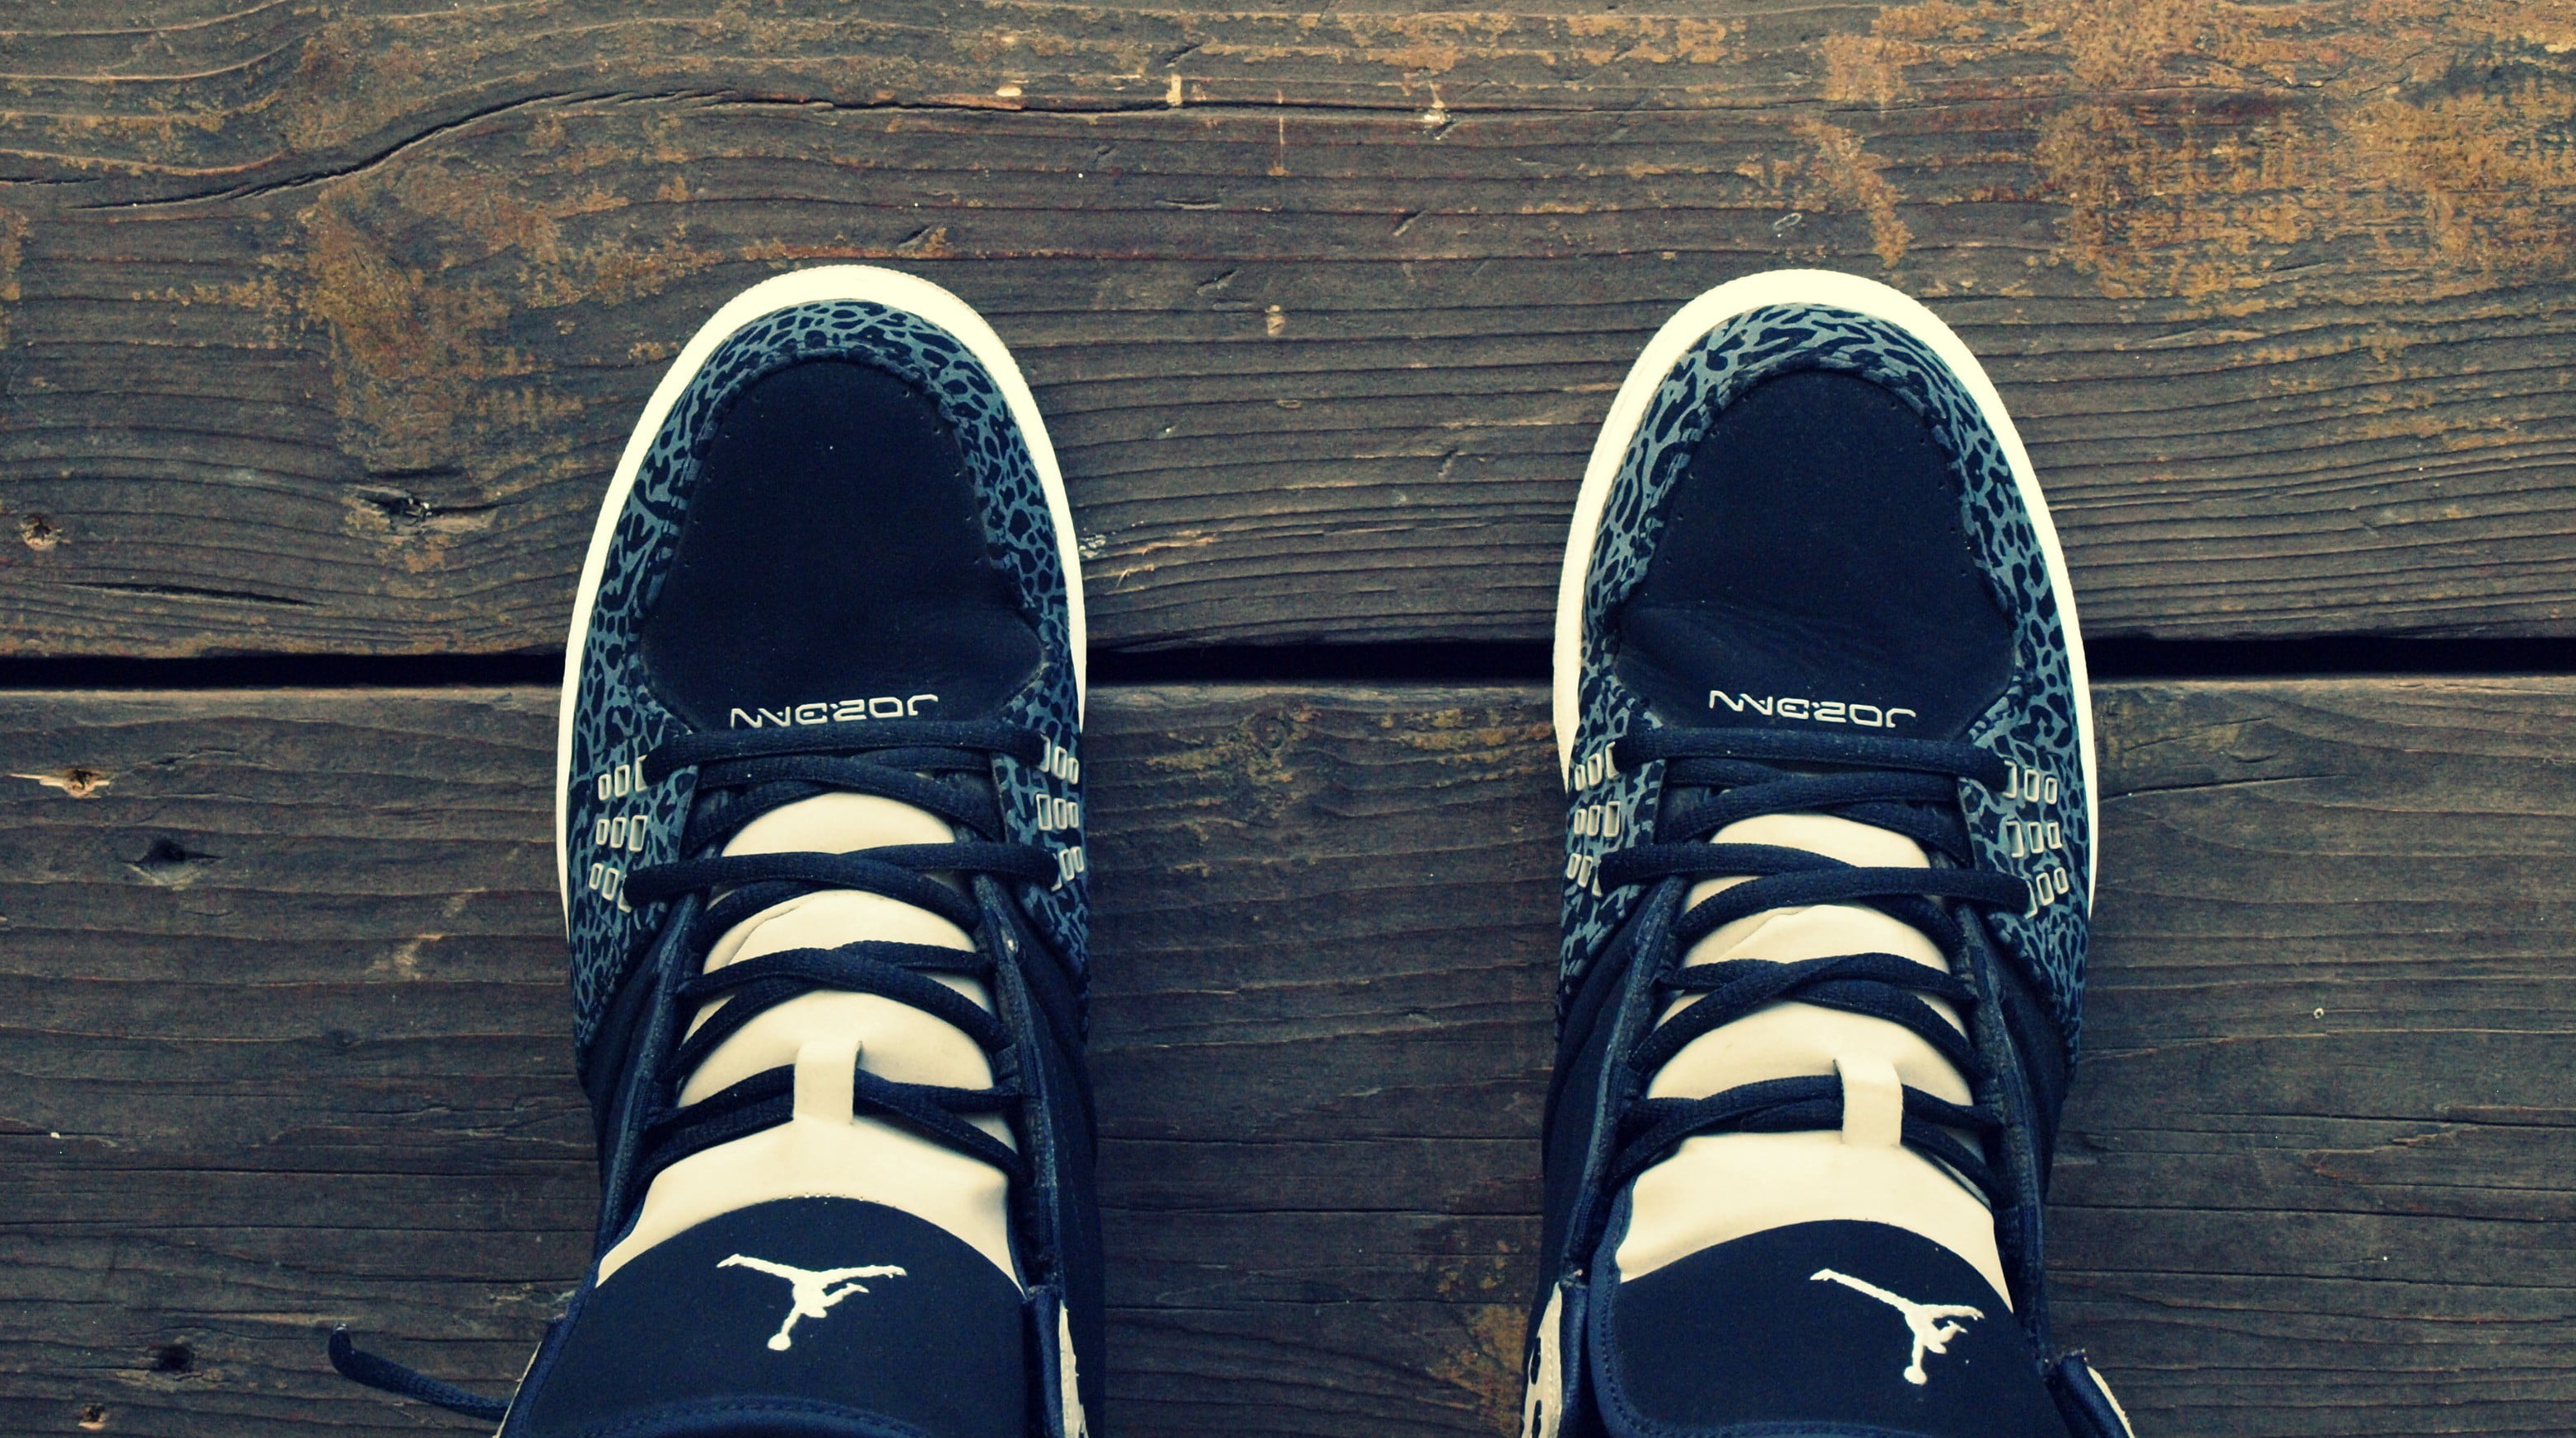 pair of black Air Jordan basketball shoes, Air Jordan, Jumpman